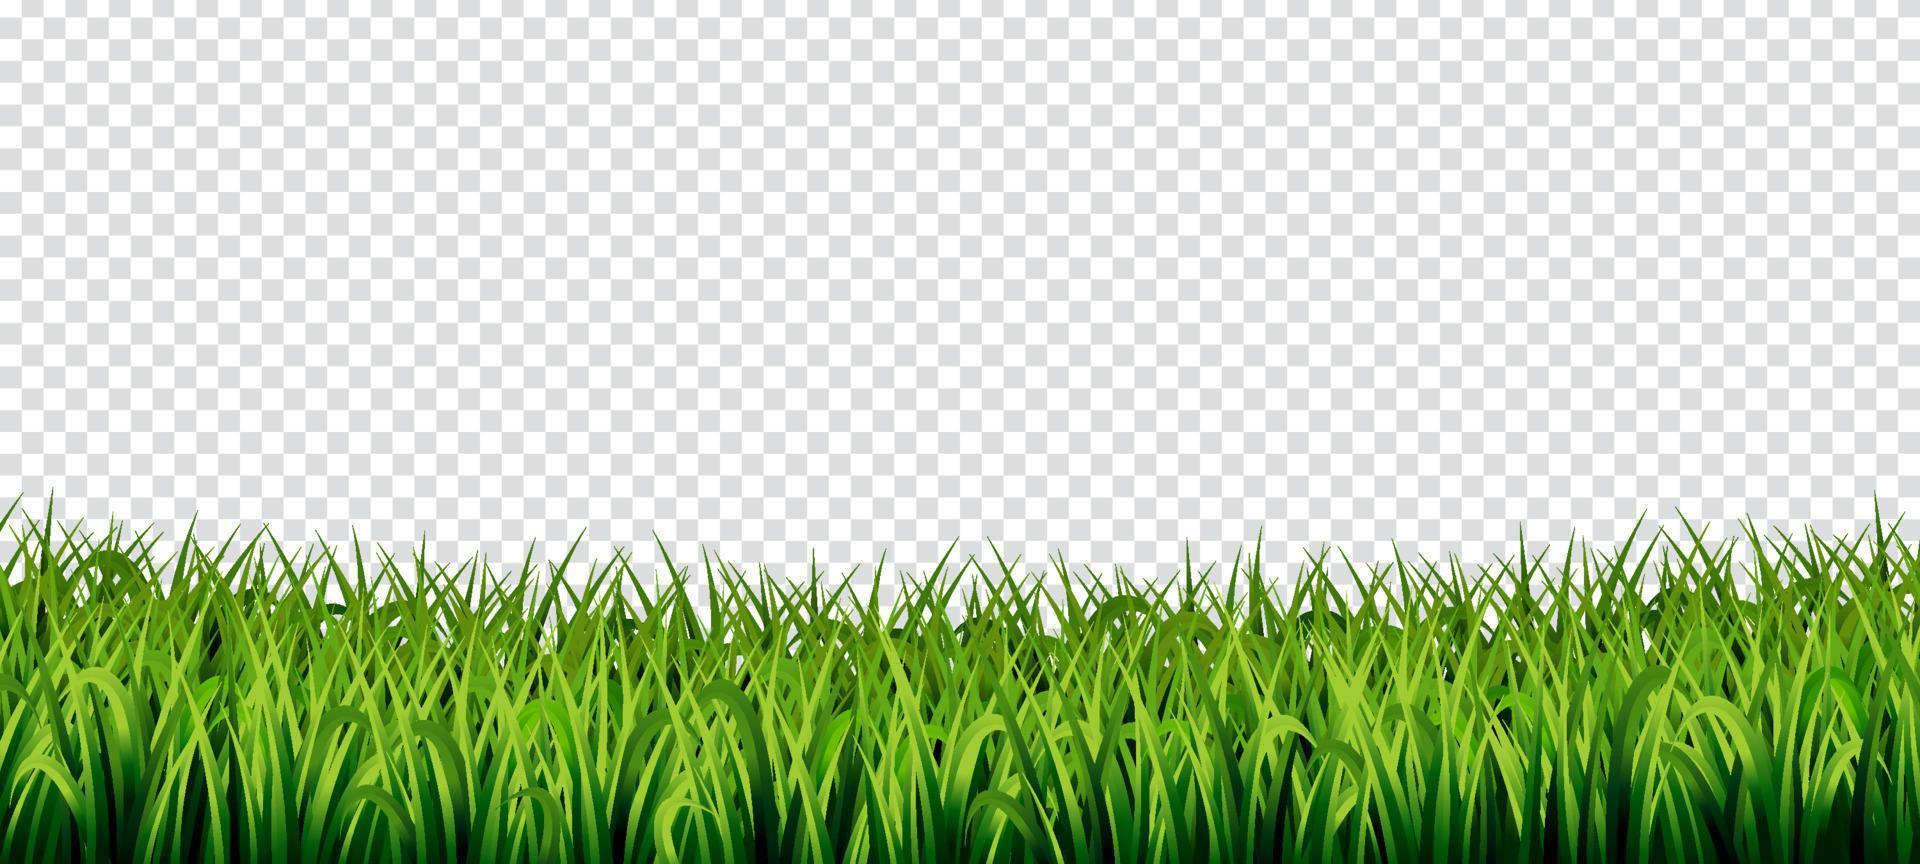 Grass Transparent Background vector